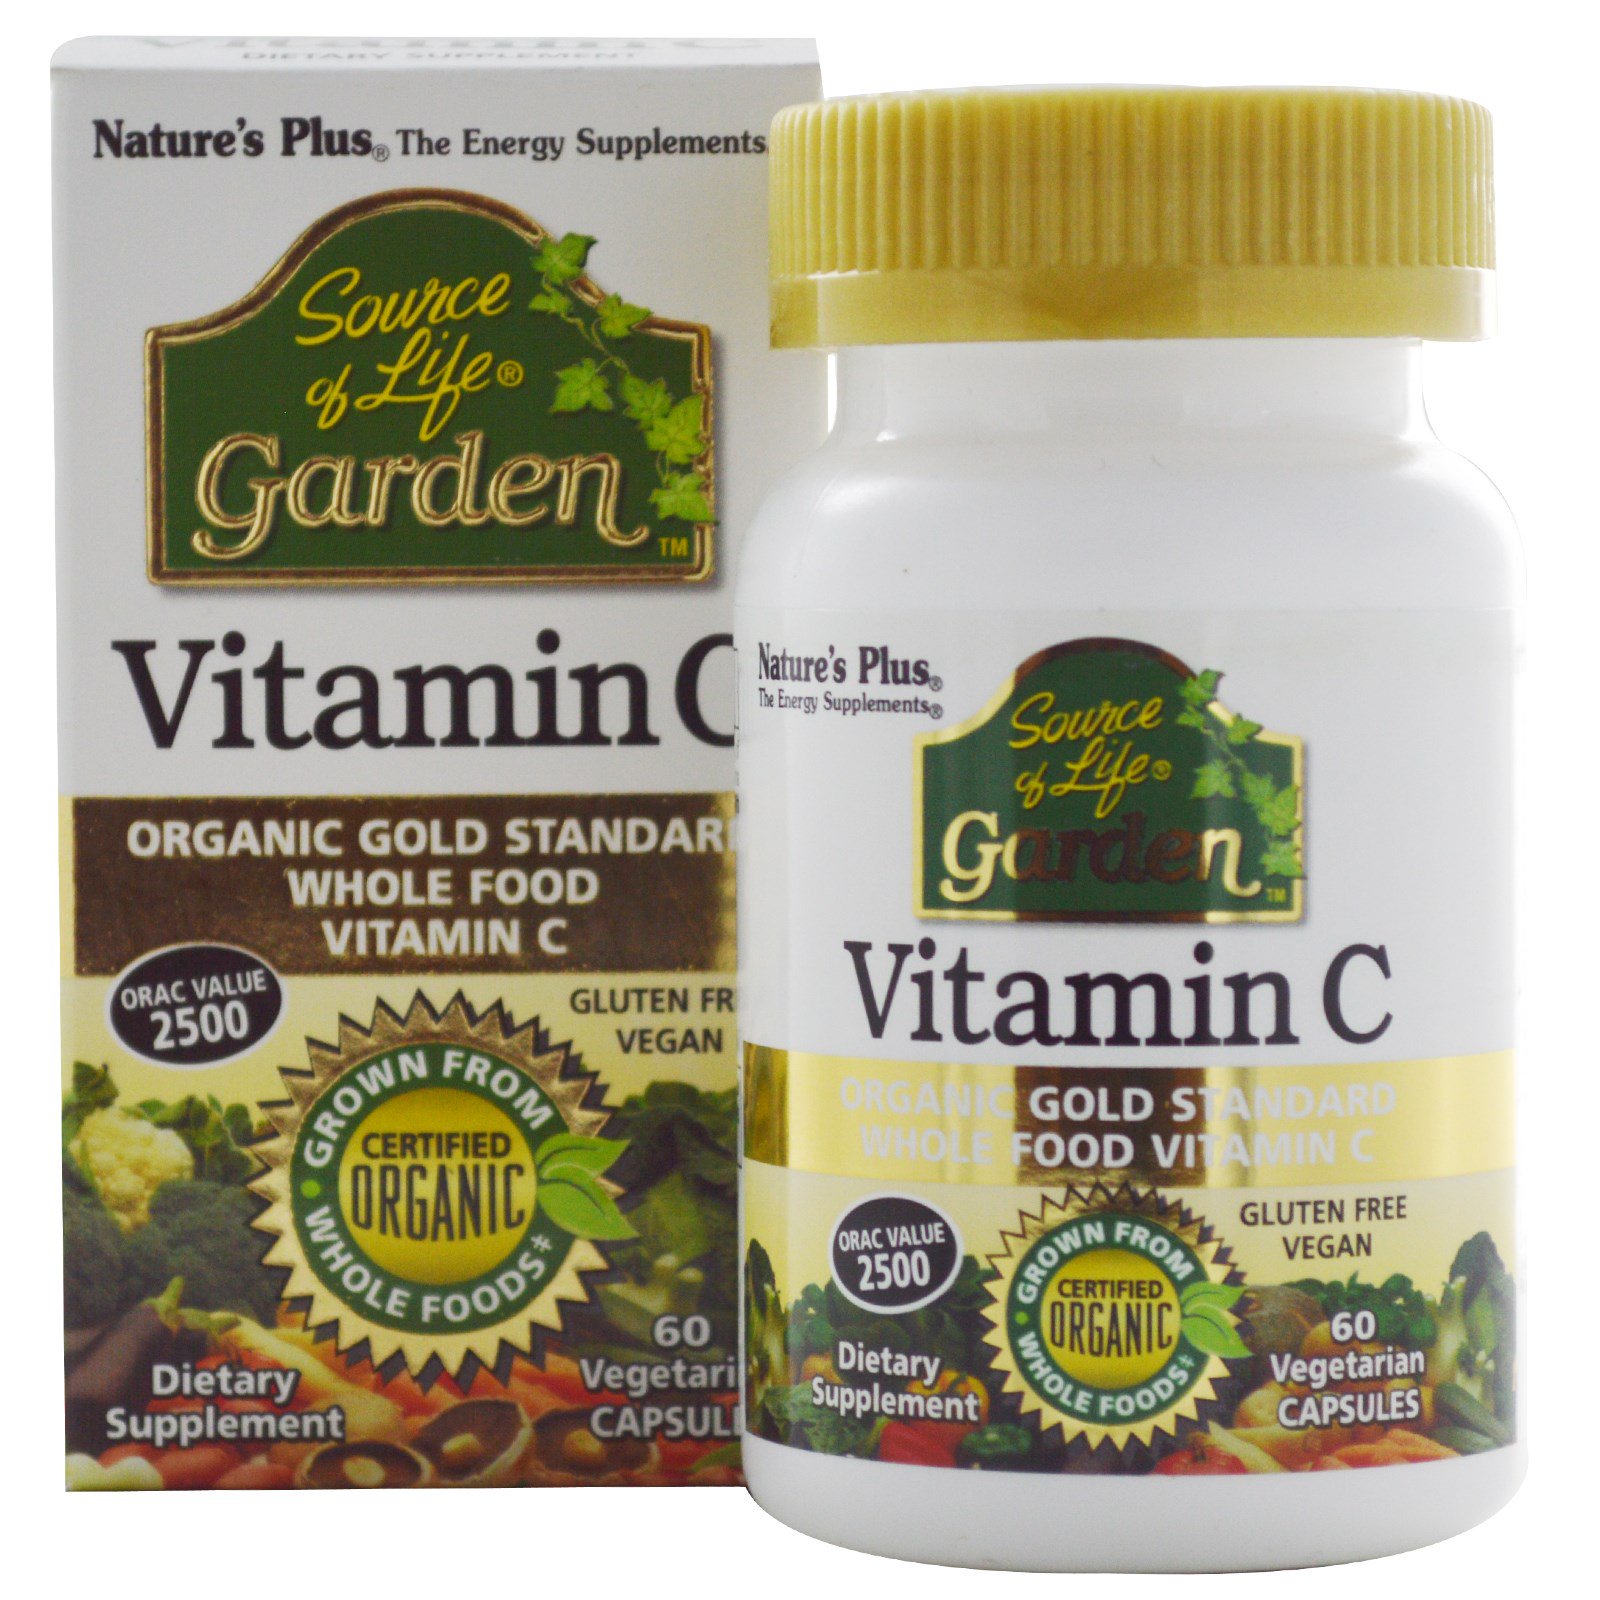 Nature's plus витамины. Nature's Plus vitamina c. Natures Plus Vitamin c. Витамины Garden. Гарден лайф витамины.